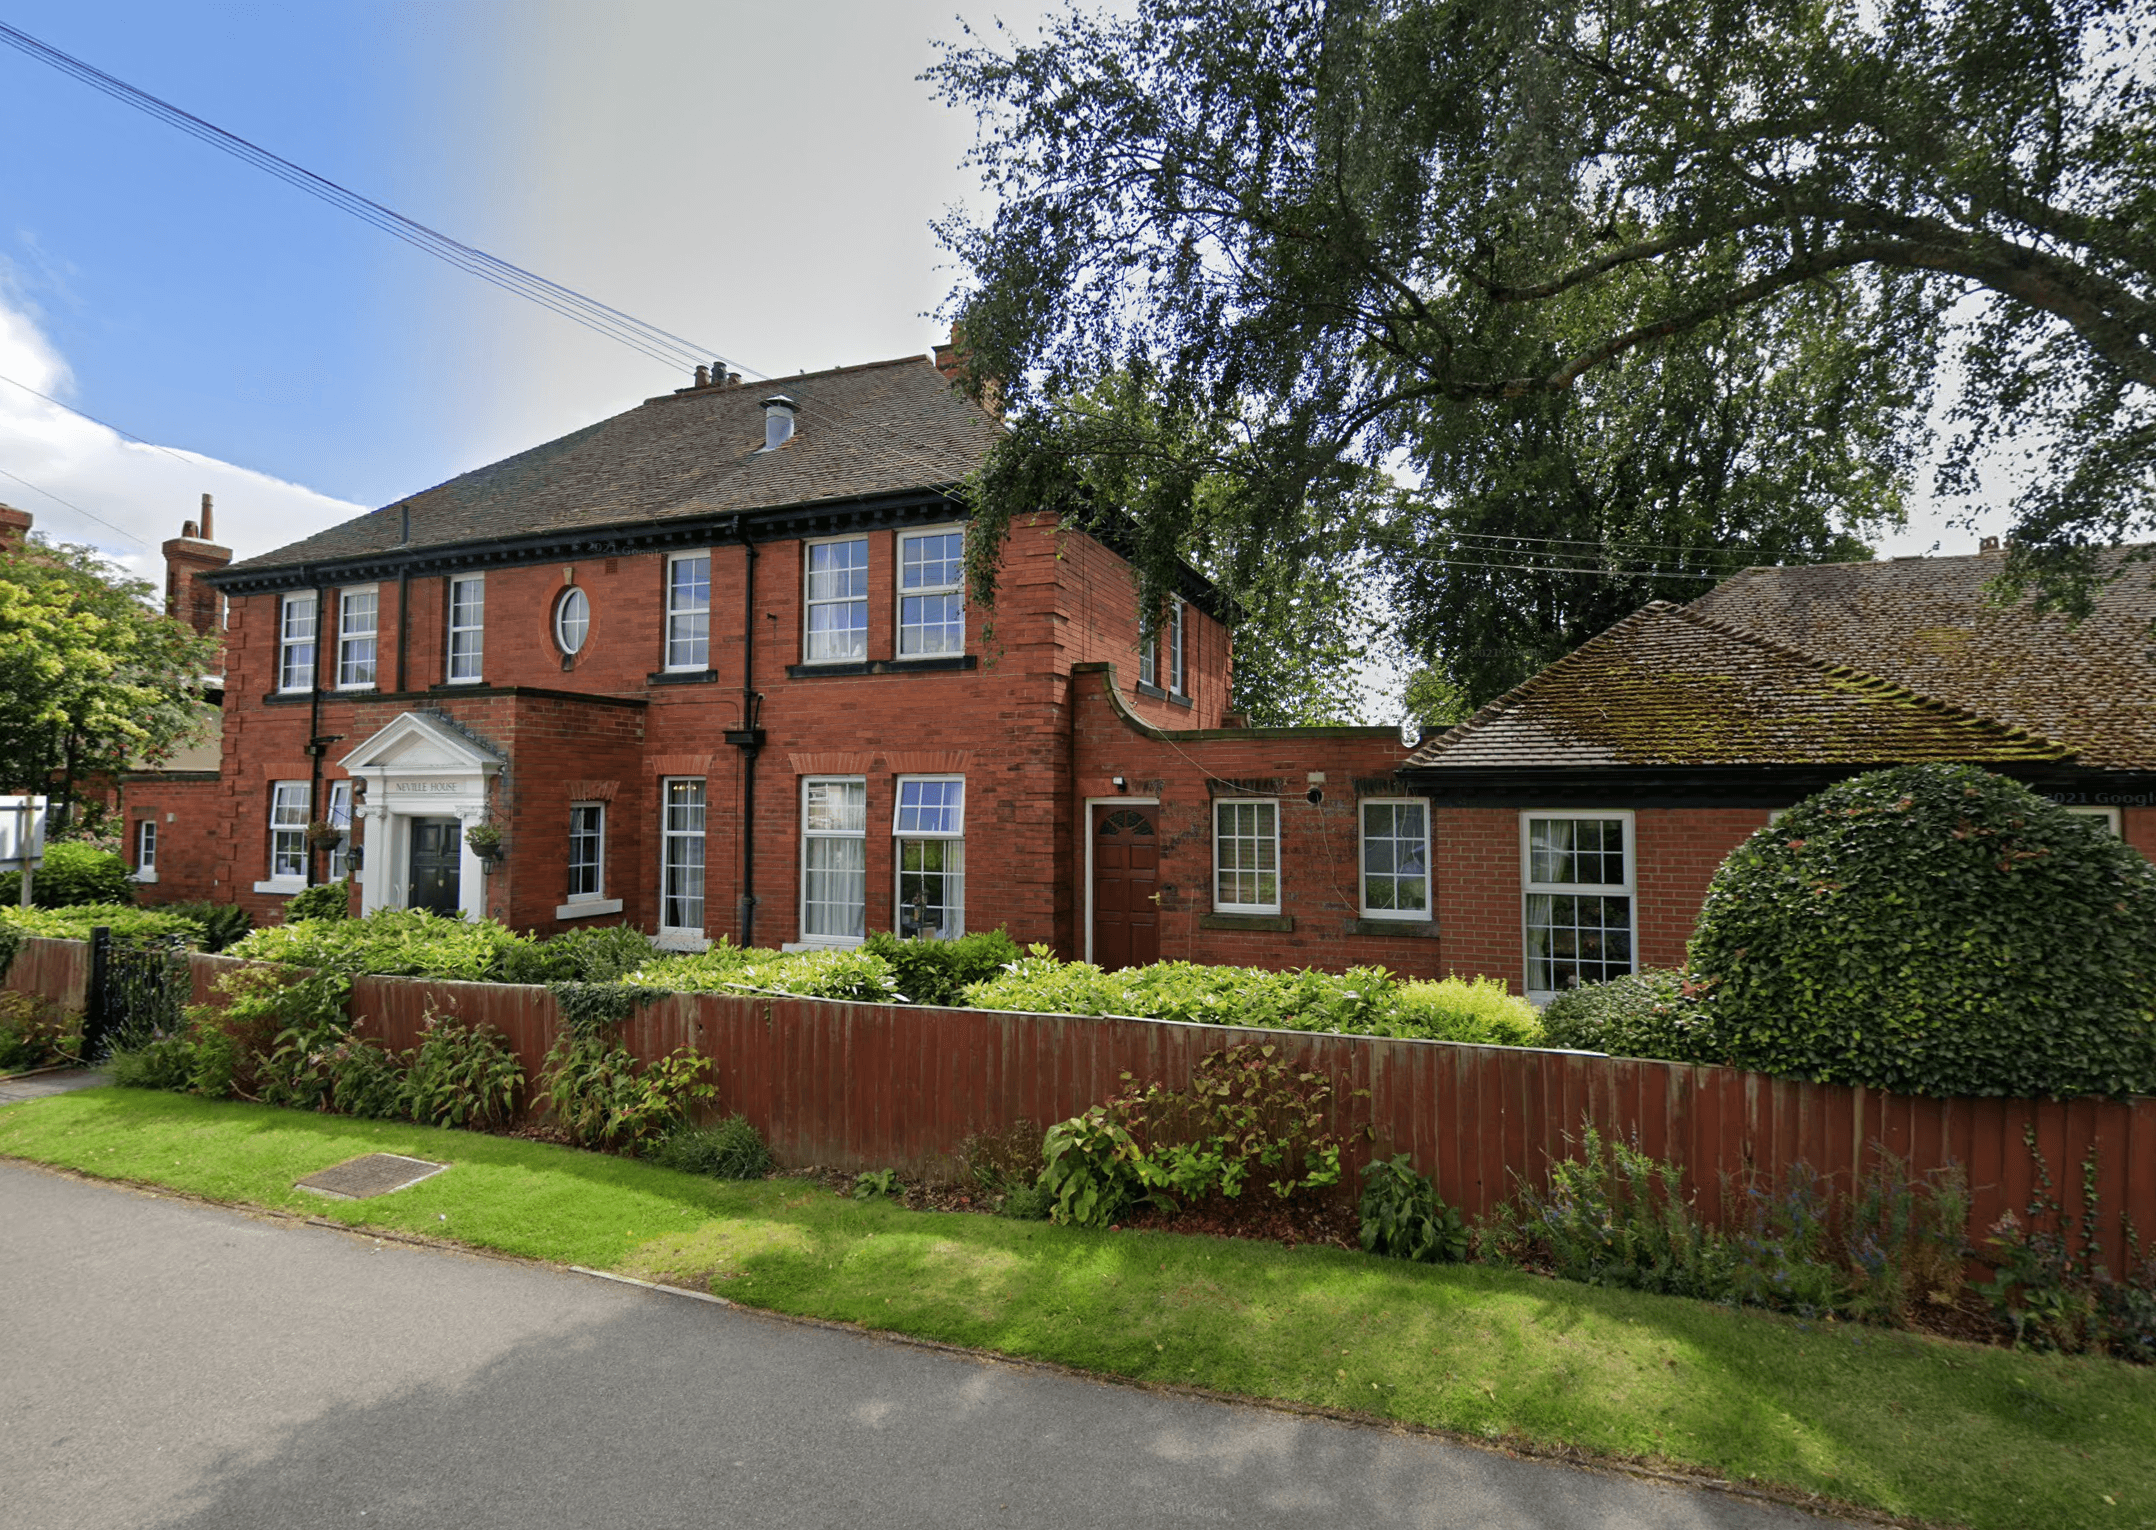 Exterior of Neville House in Chapel Allerton, Leeds